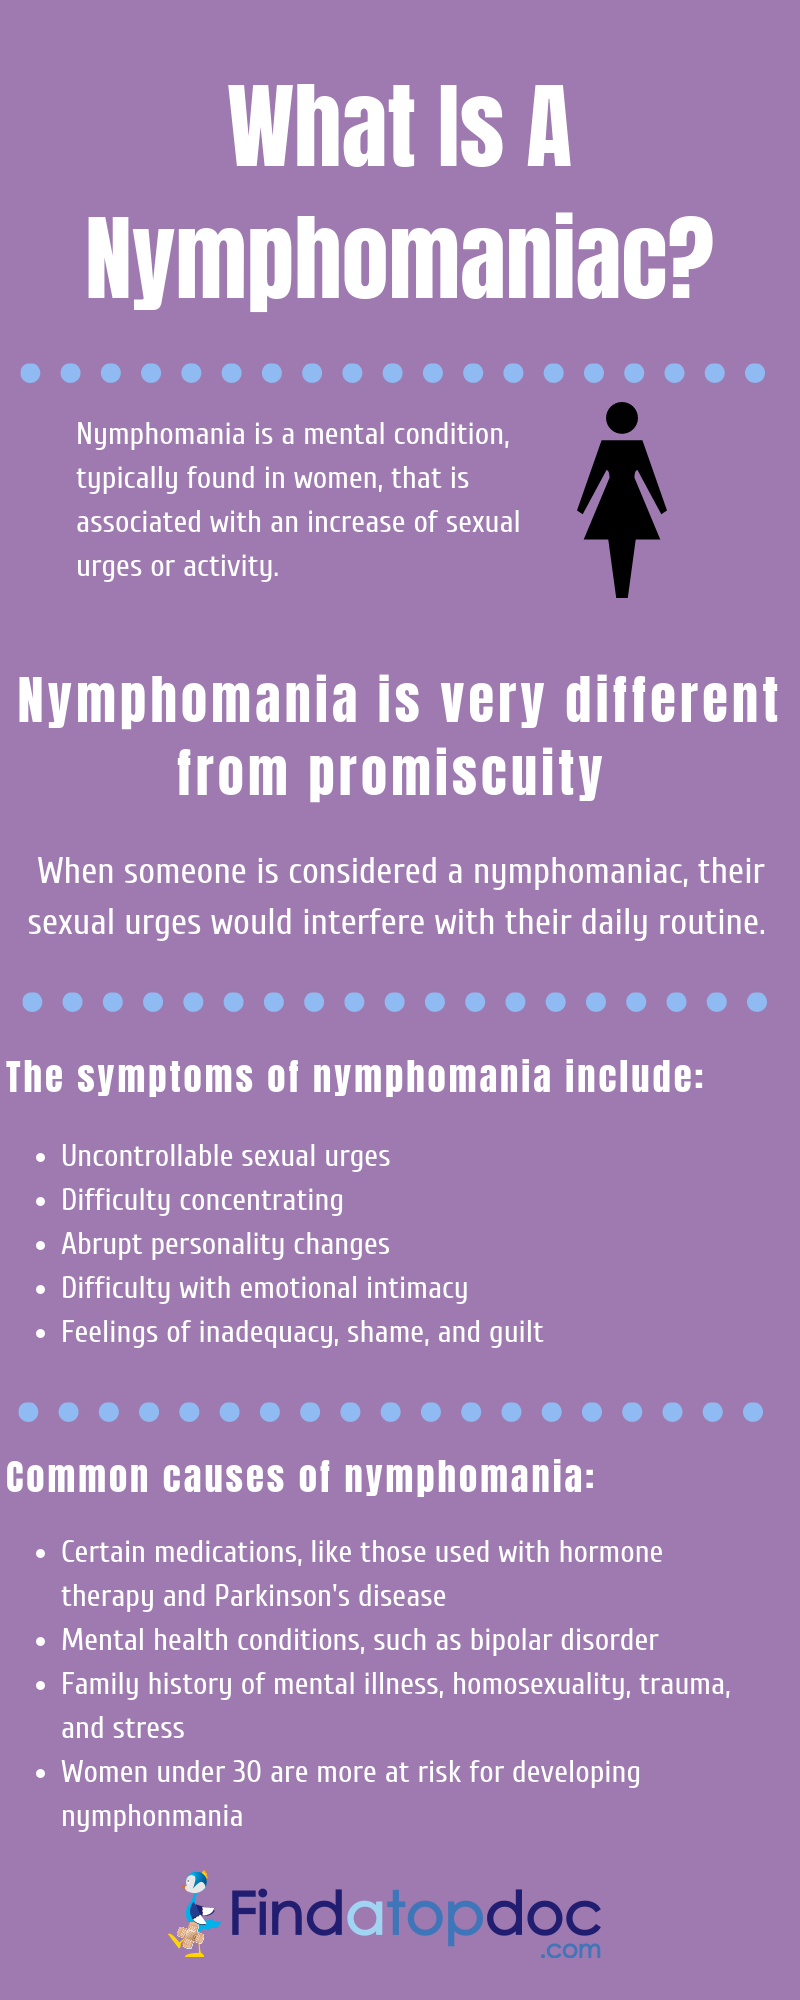 Nymphomania Causes, Symptoms, Treatment, and Diagnosis